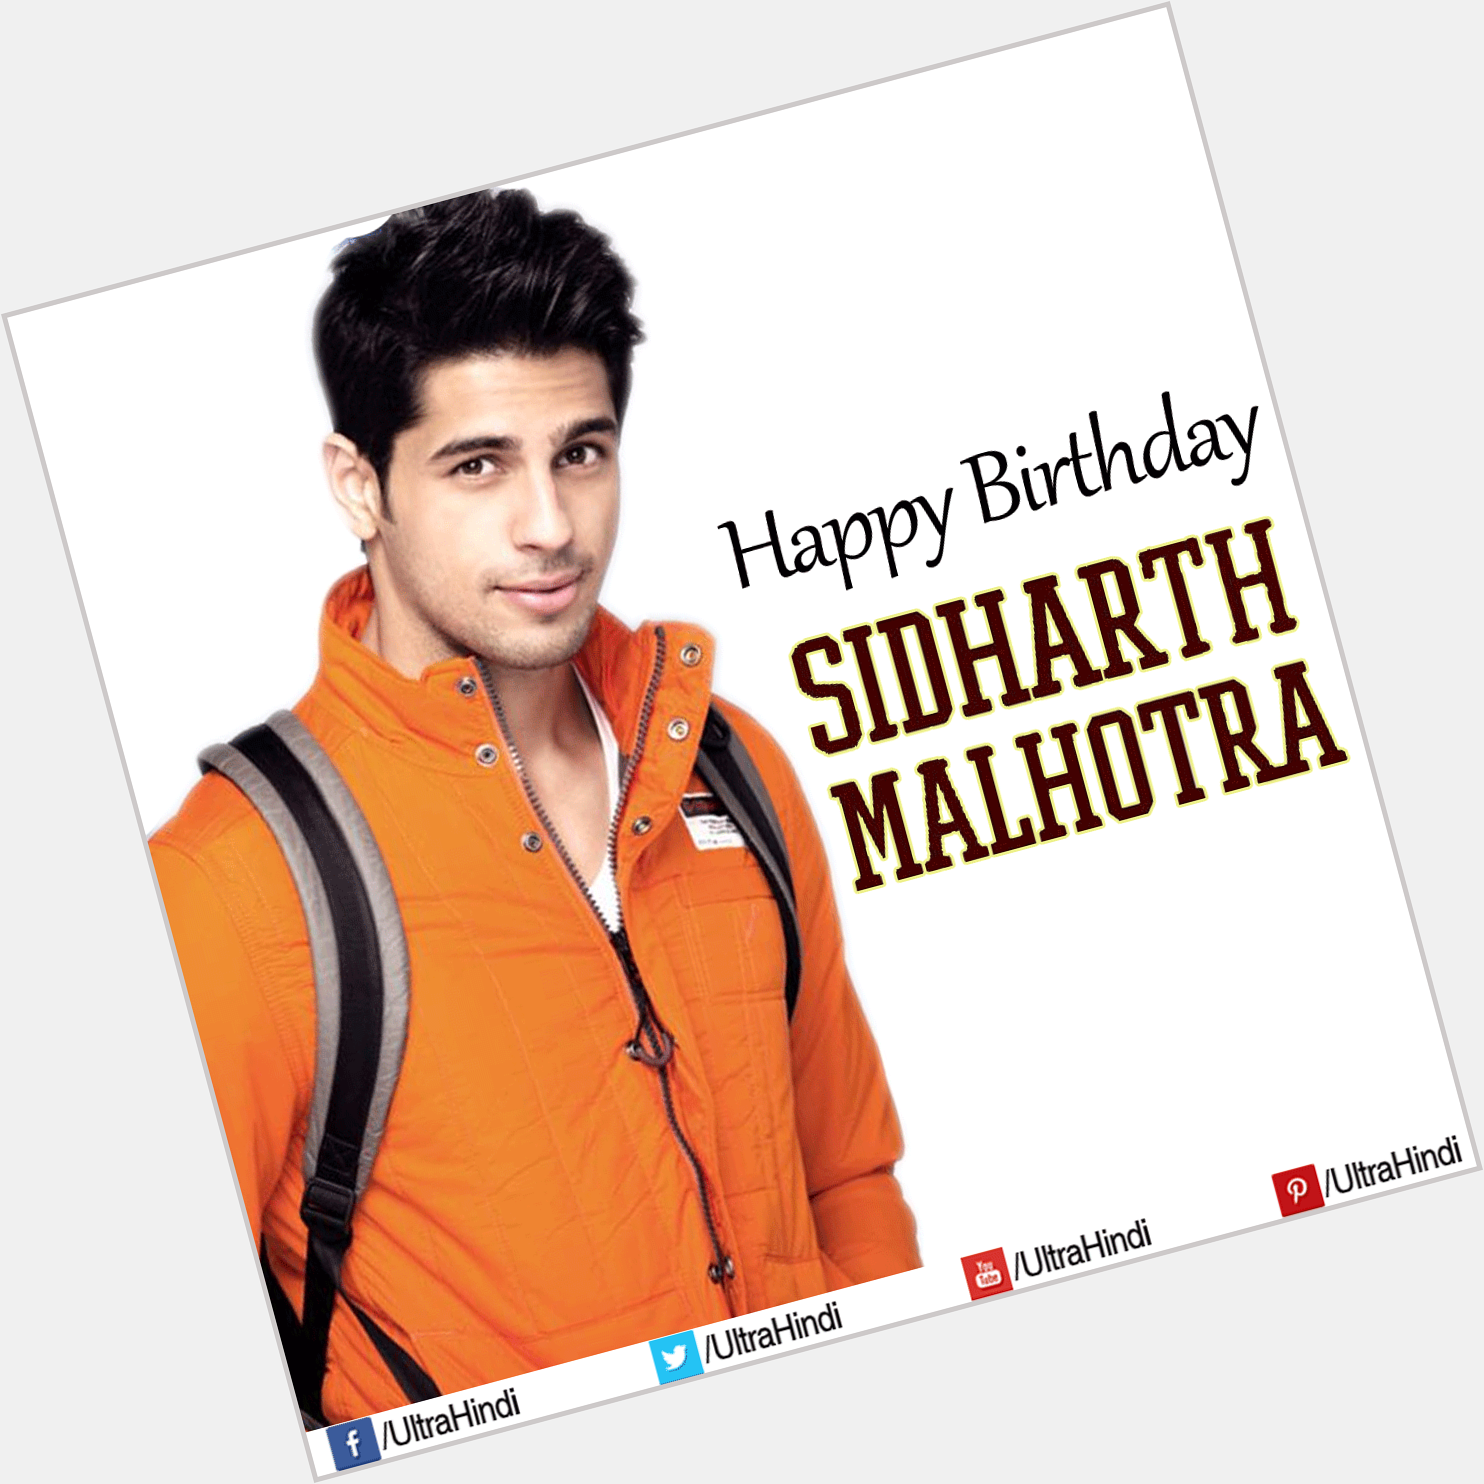 Wishing one of the latest hunks of Bollywood a very Happy Birthday!
Happy Birthday Sidharth Malhotra! 